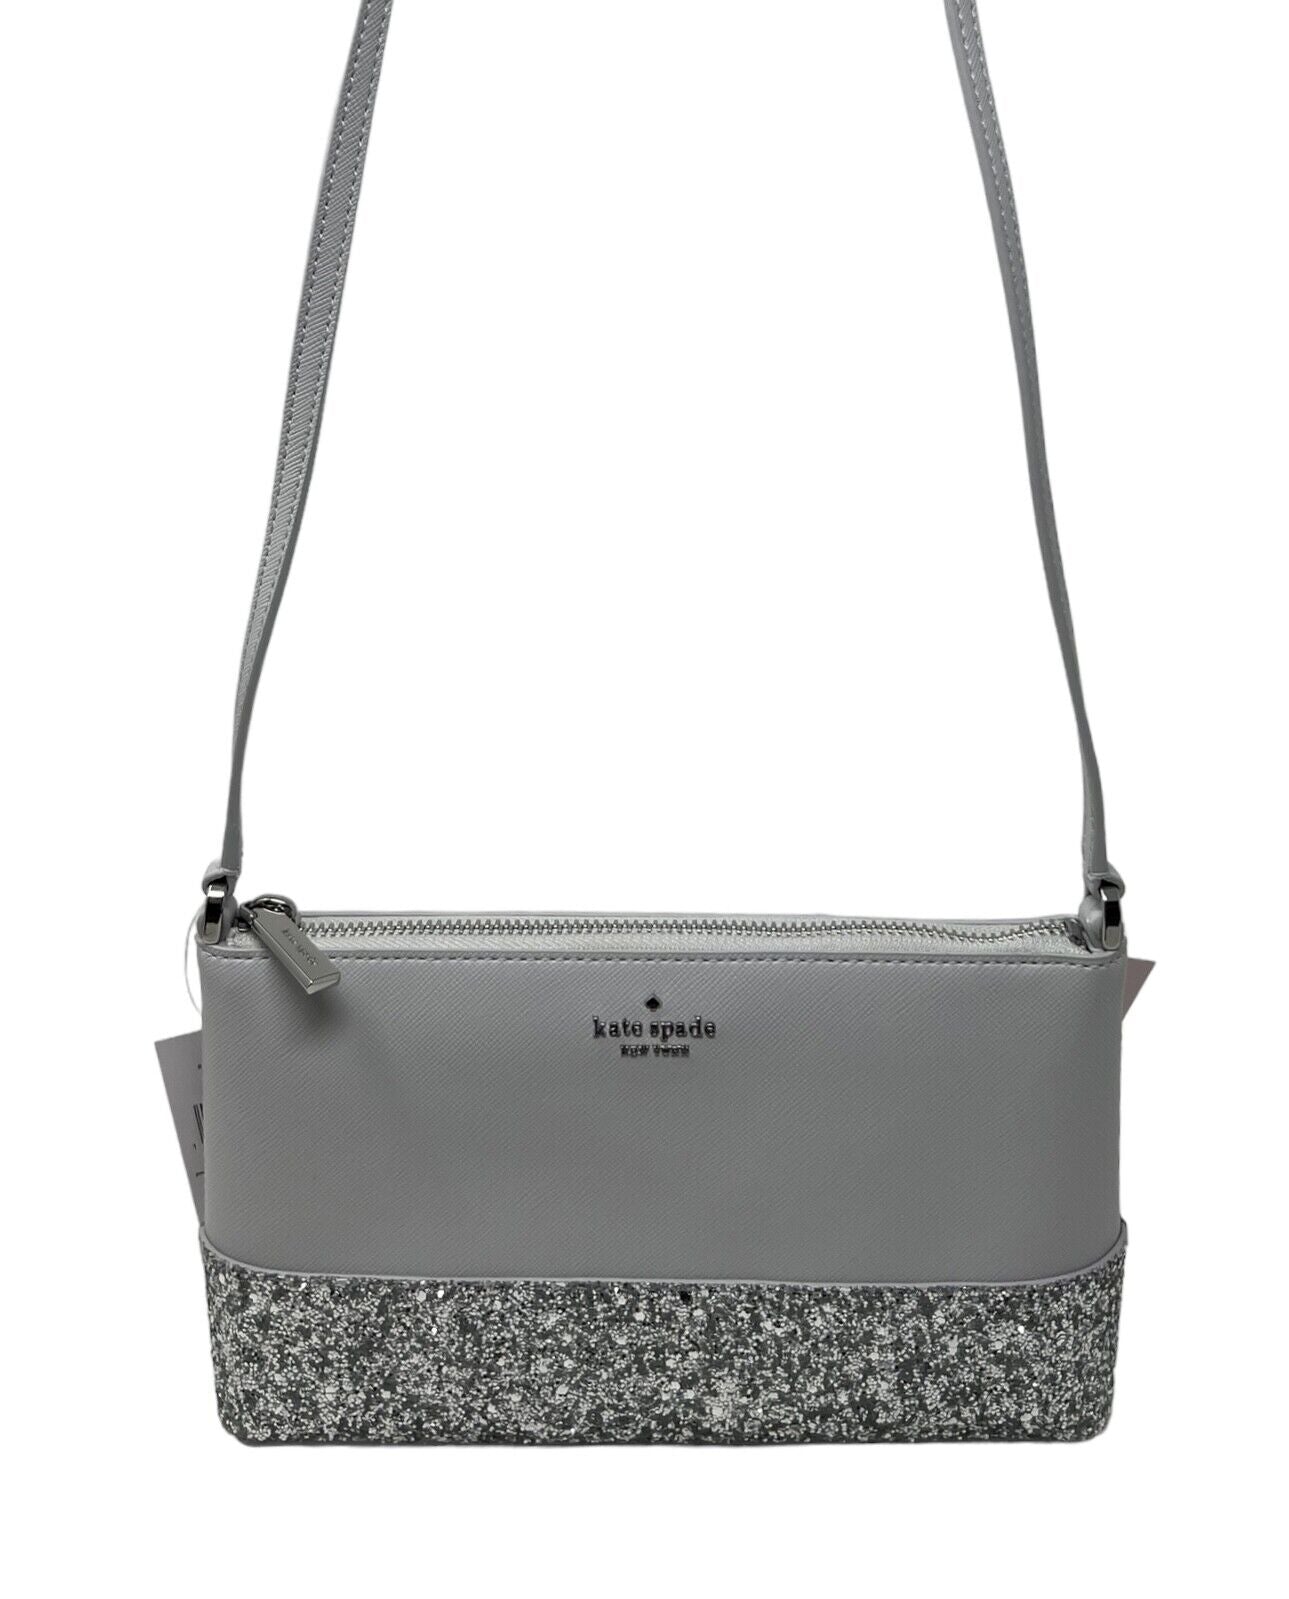 Kate Spade Flash Glitter Fabric Crossbody Bag K8711 $279